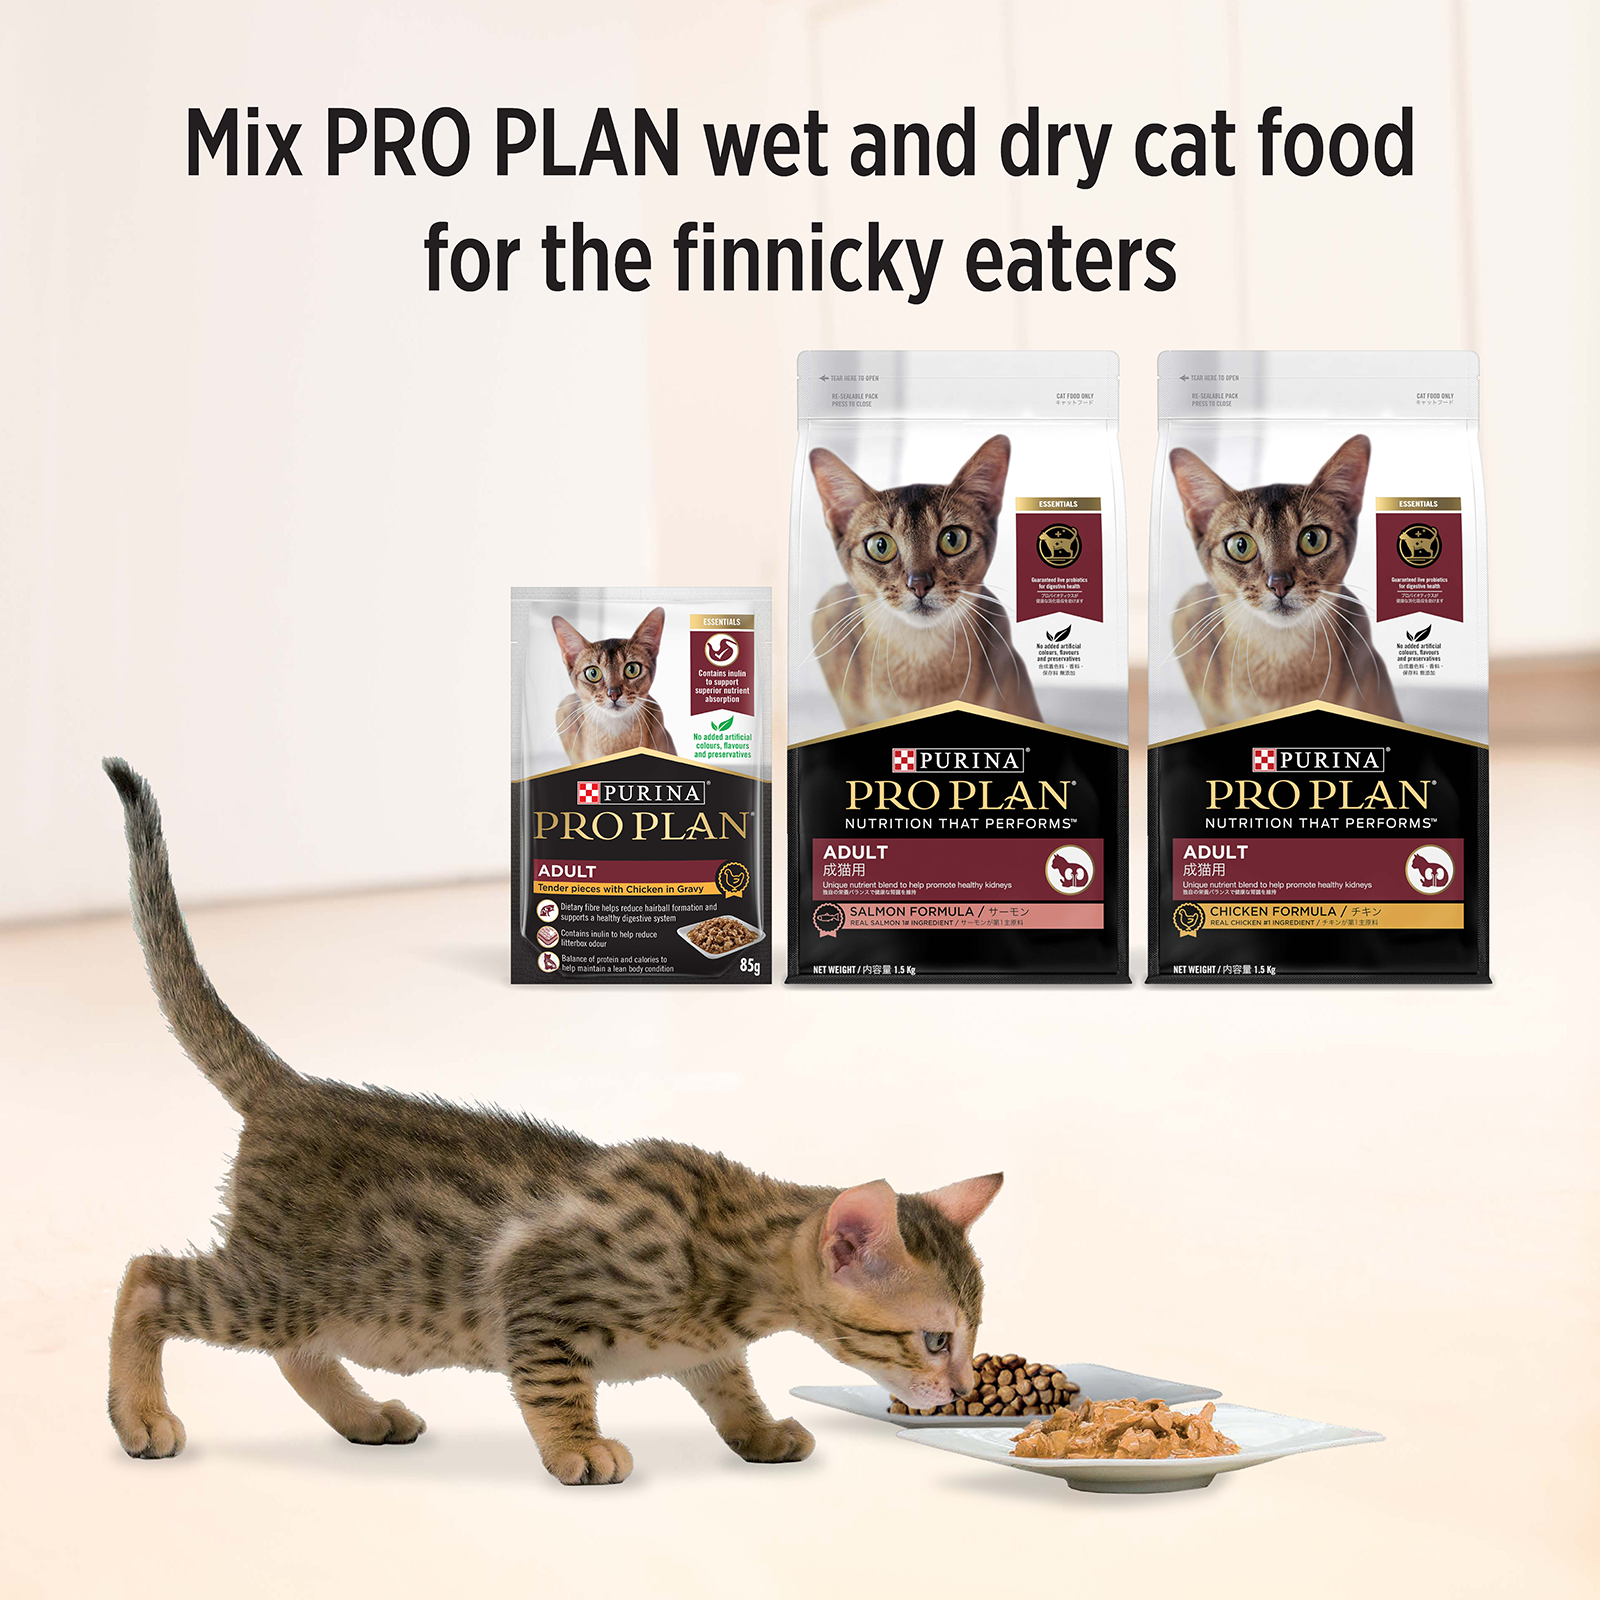 Pro Plan Cat Food Pouch Adult Chicken & Gravy